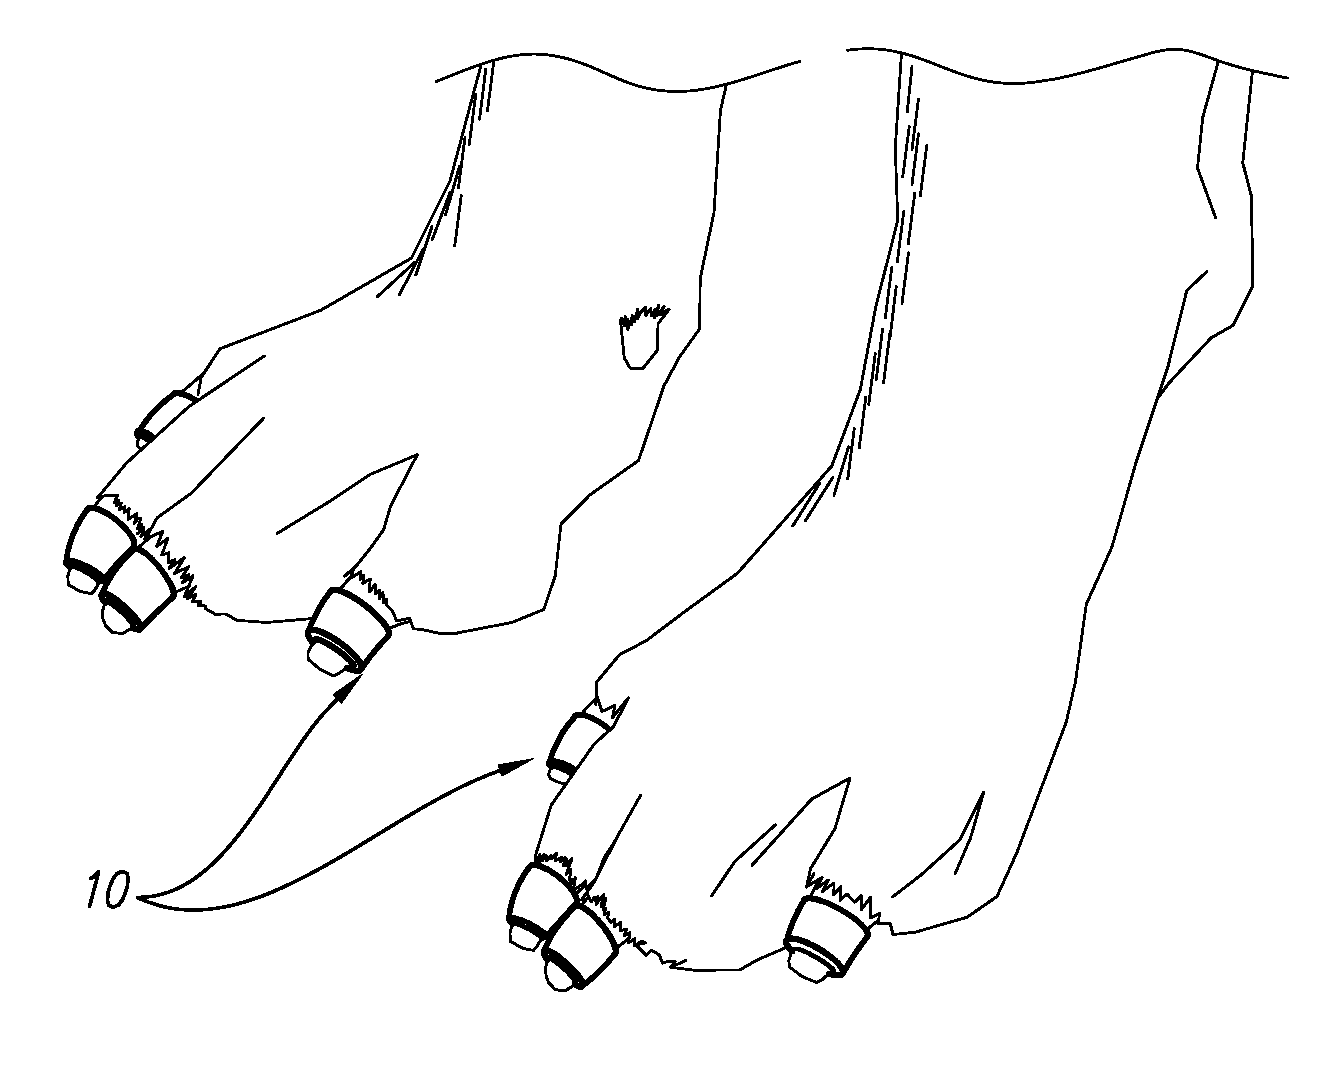 Animal toenail grips